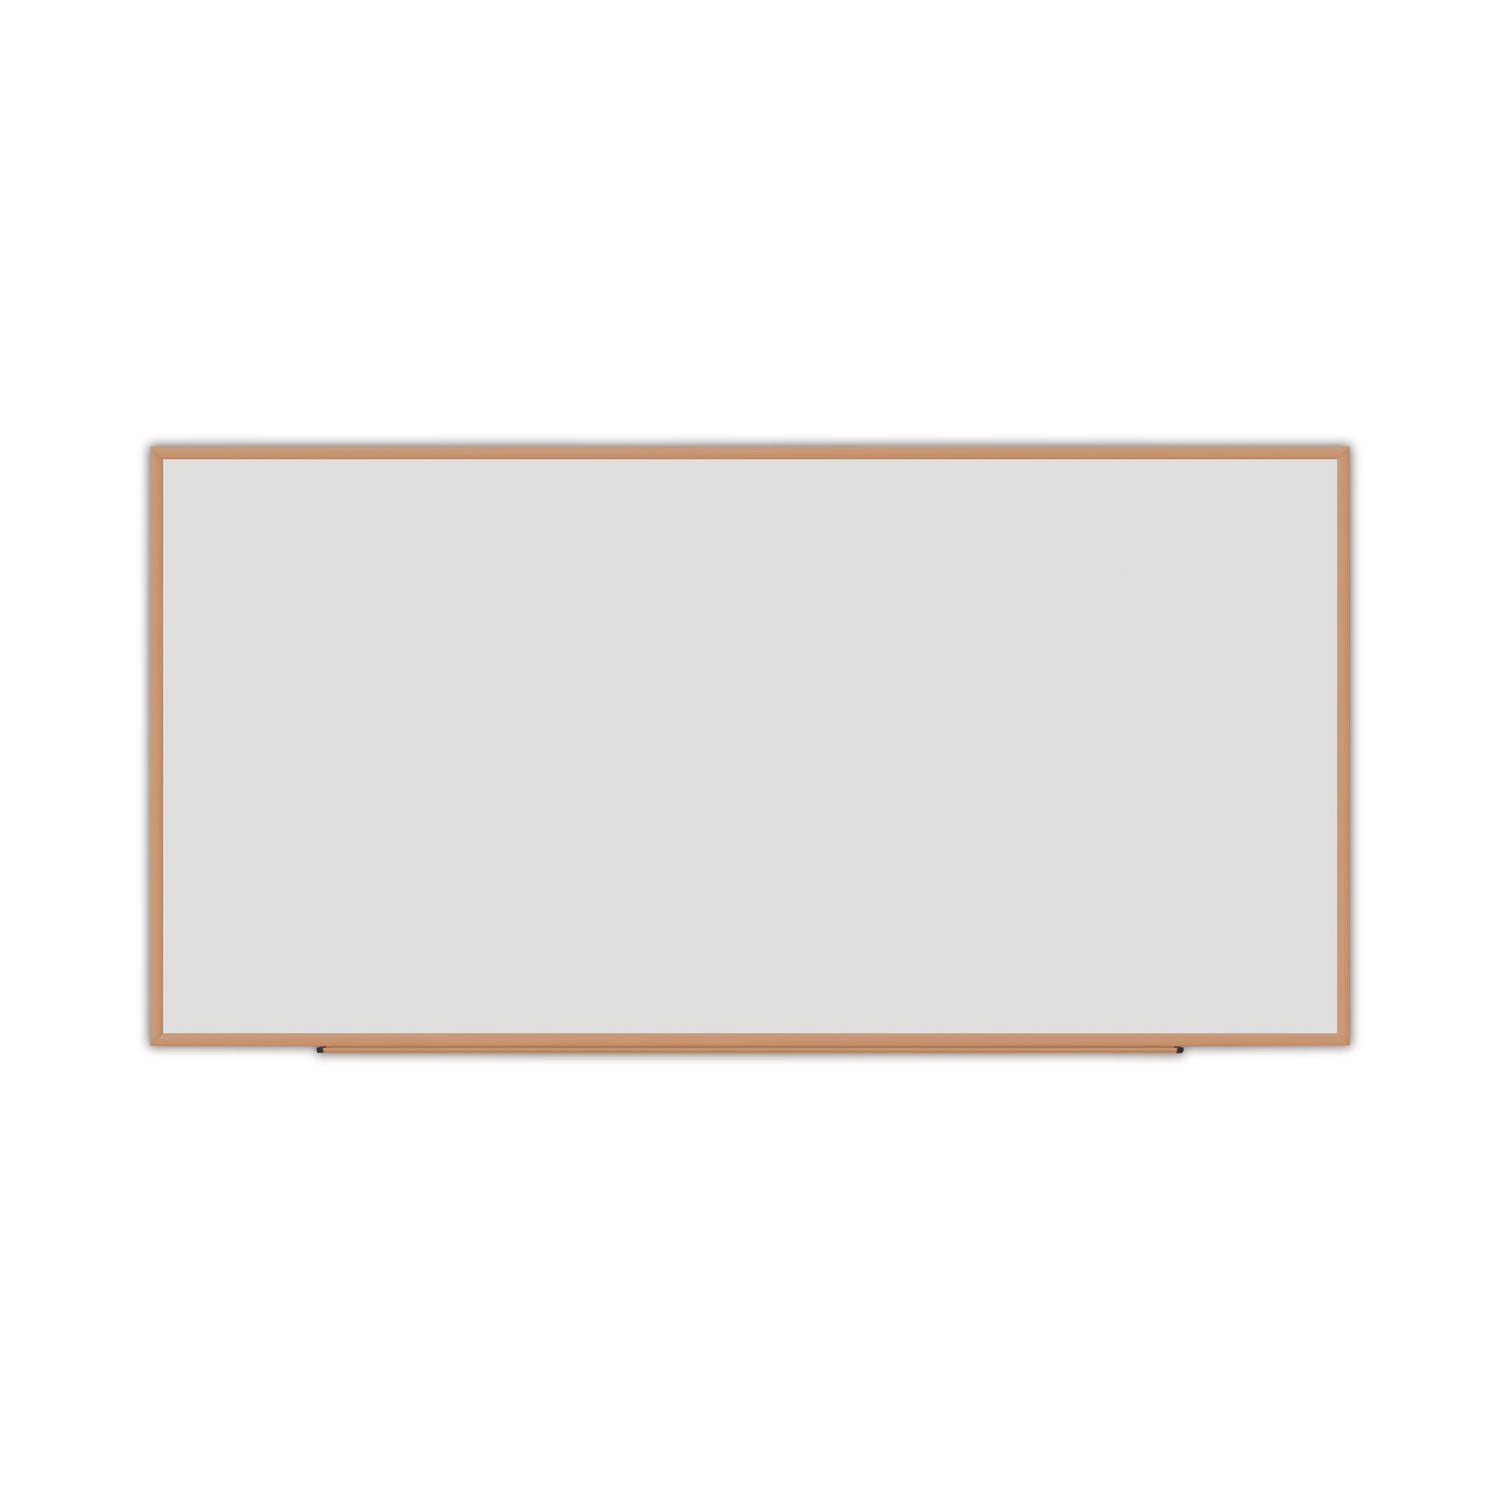 Deluxe Melamine Dry Erase Board, 96 x 48, Melamine White Surface, Oak Fiberboard Frame - 